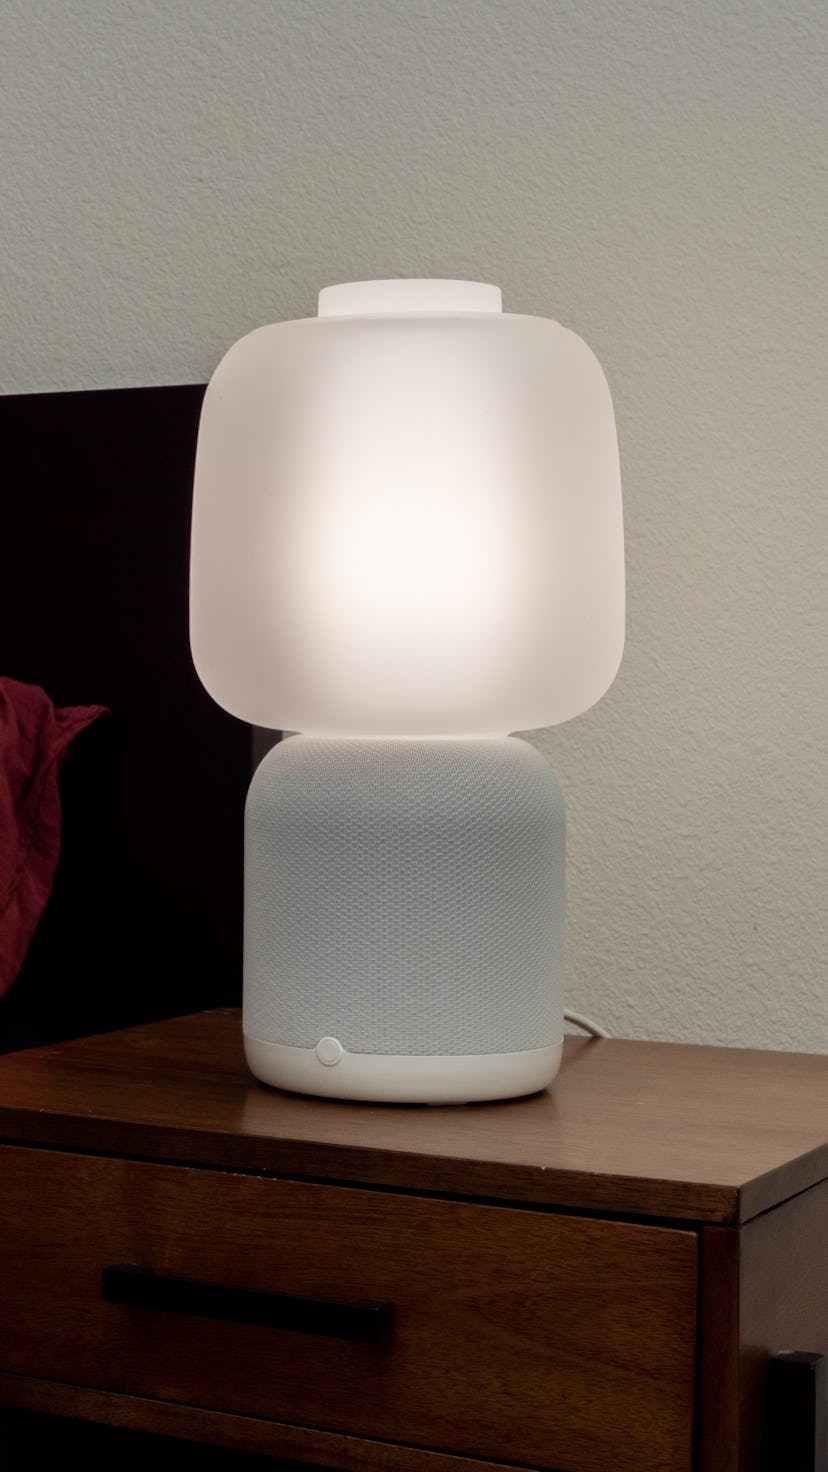 Ikea Symfonisk Sonos lamp review